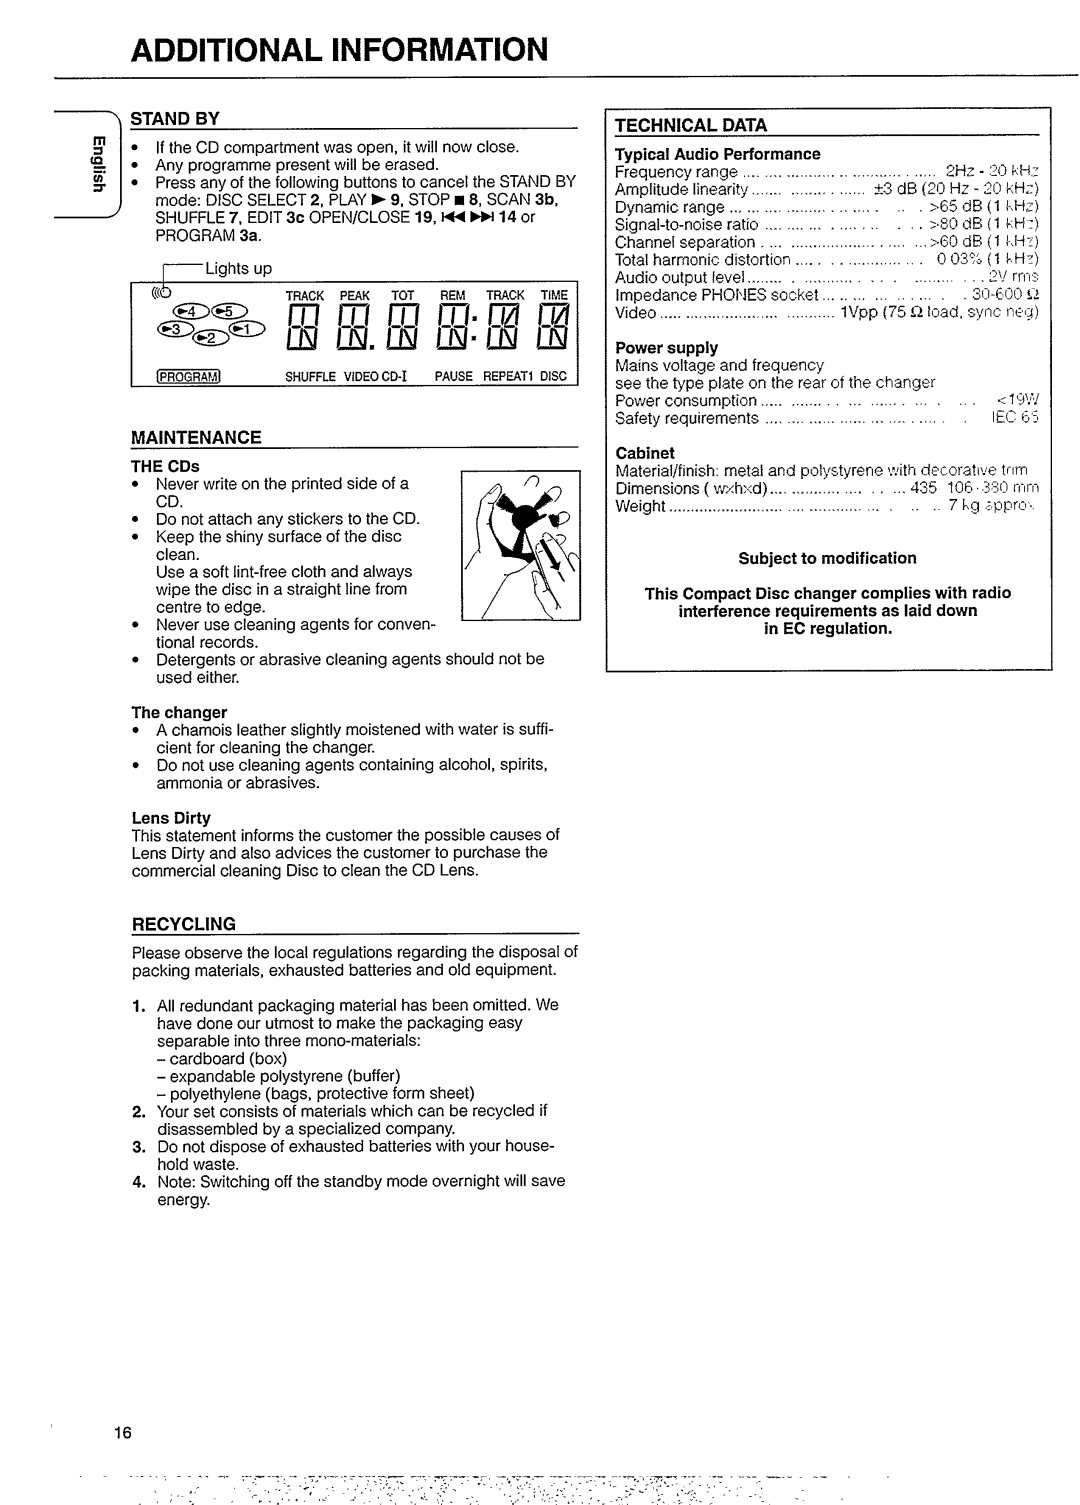 Philips CDC771V manual 